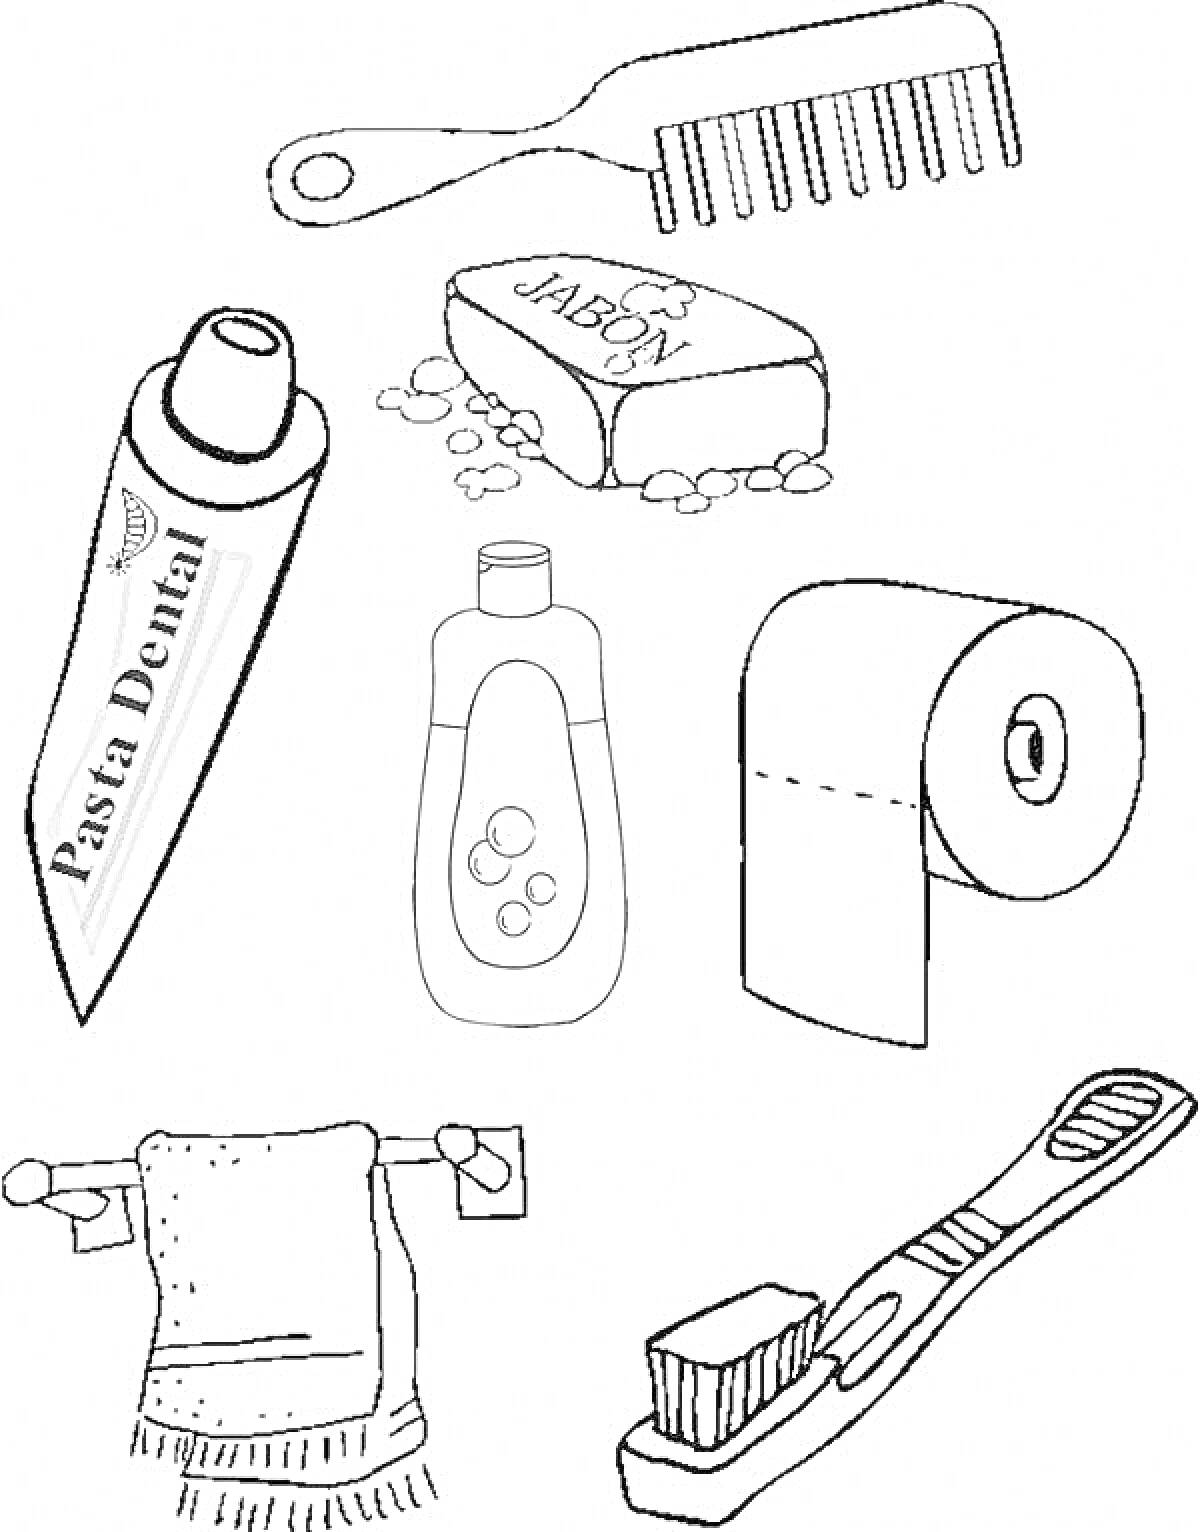 На раскраске изображено: Зубная паста, Мыло, Шампунь, Туалетная бумага, Полотенце, Расческа, Зубная щетка, Ванна